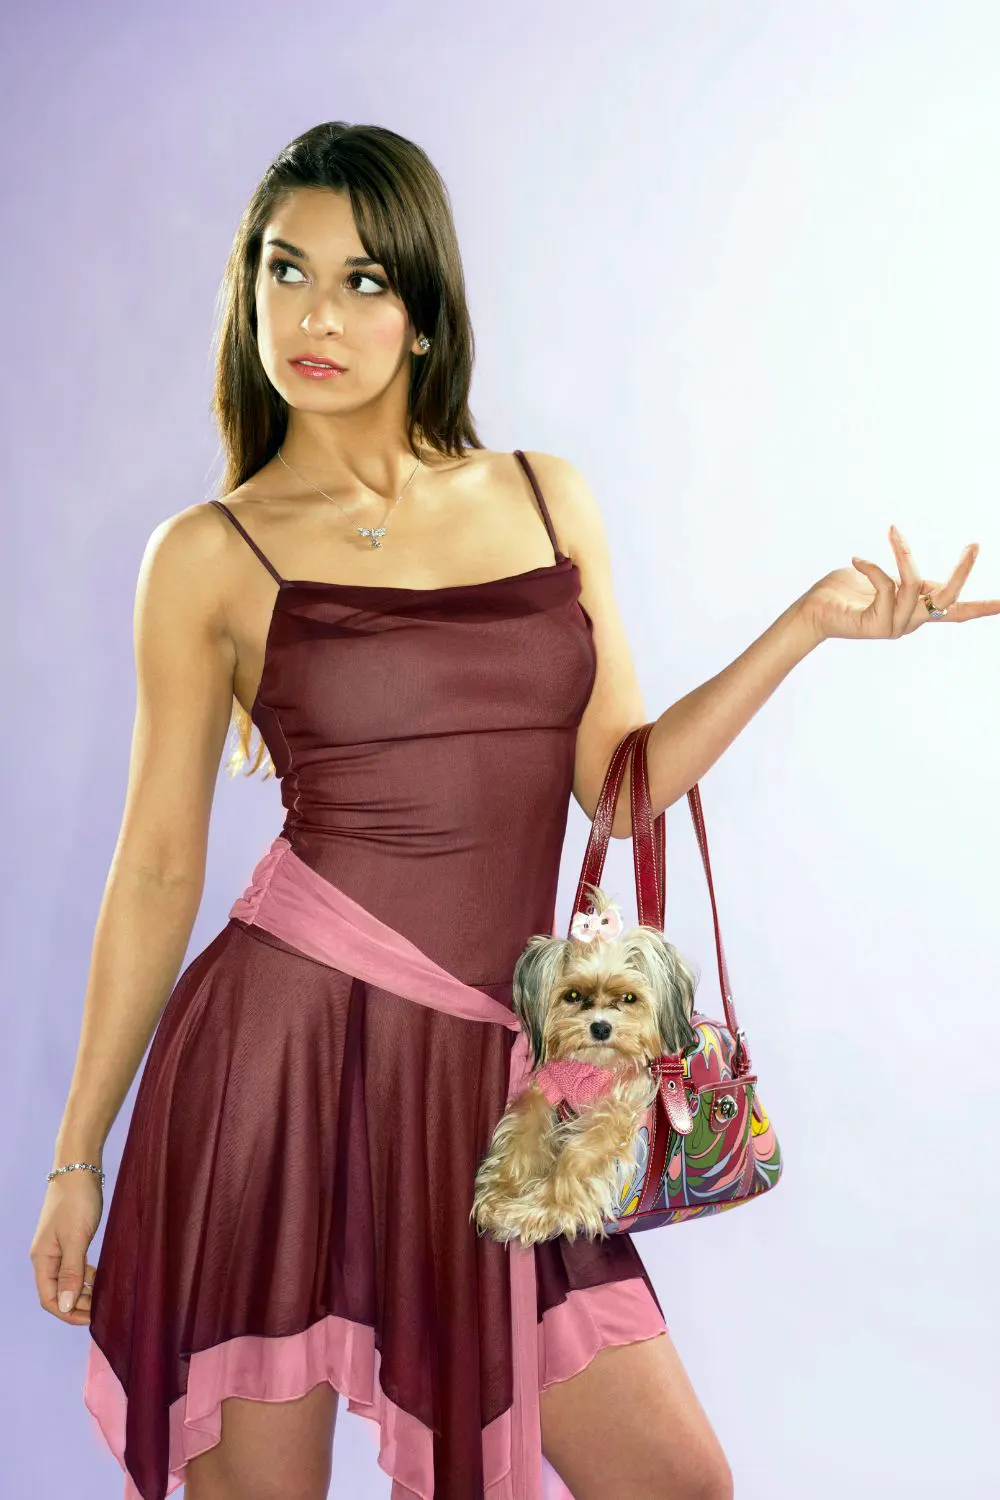 Woman Carrying Her Yorkshire Terrier in Her Handbag